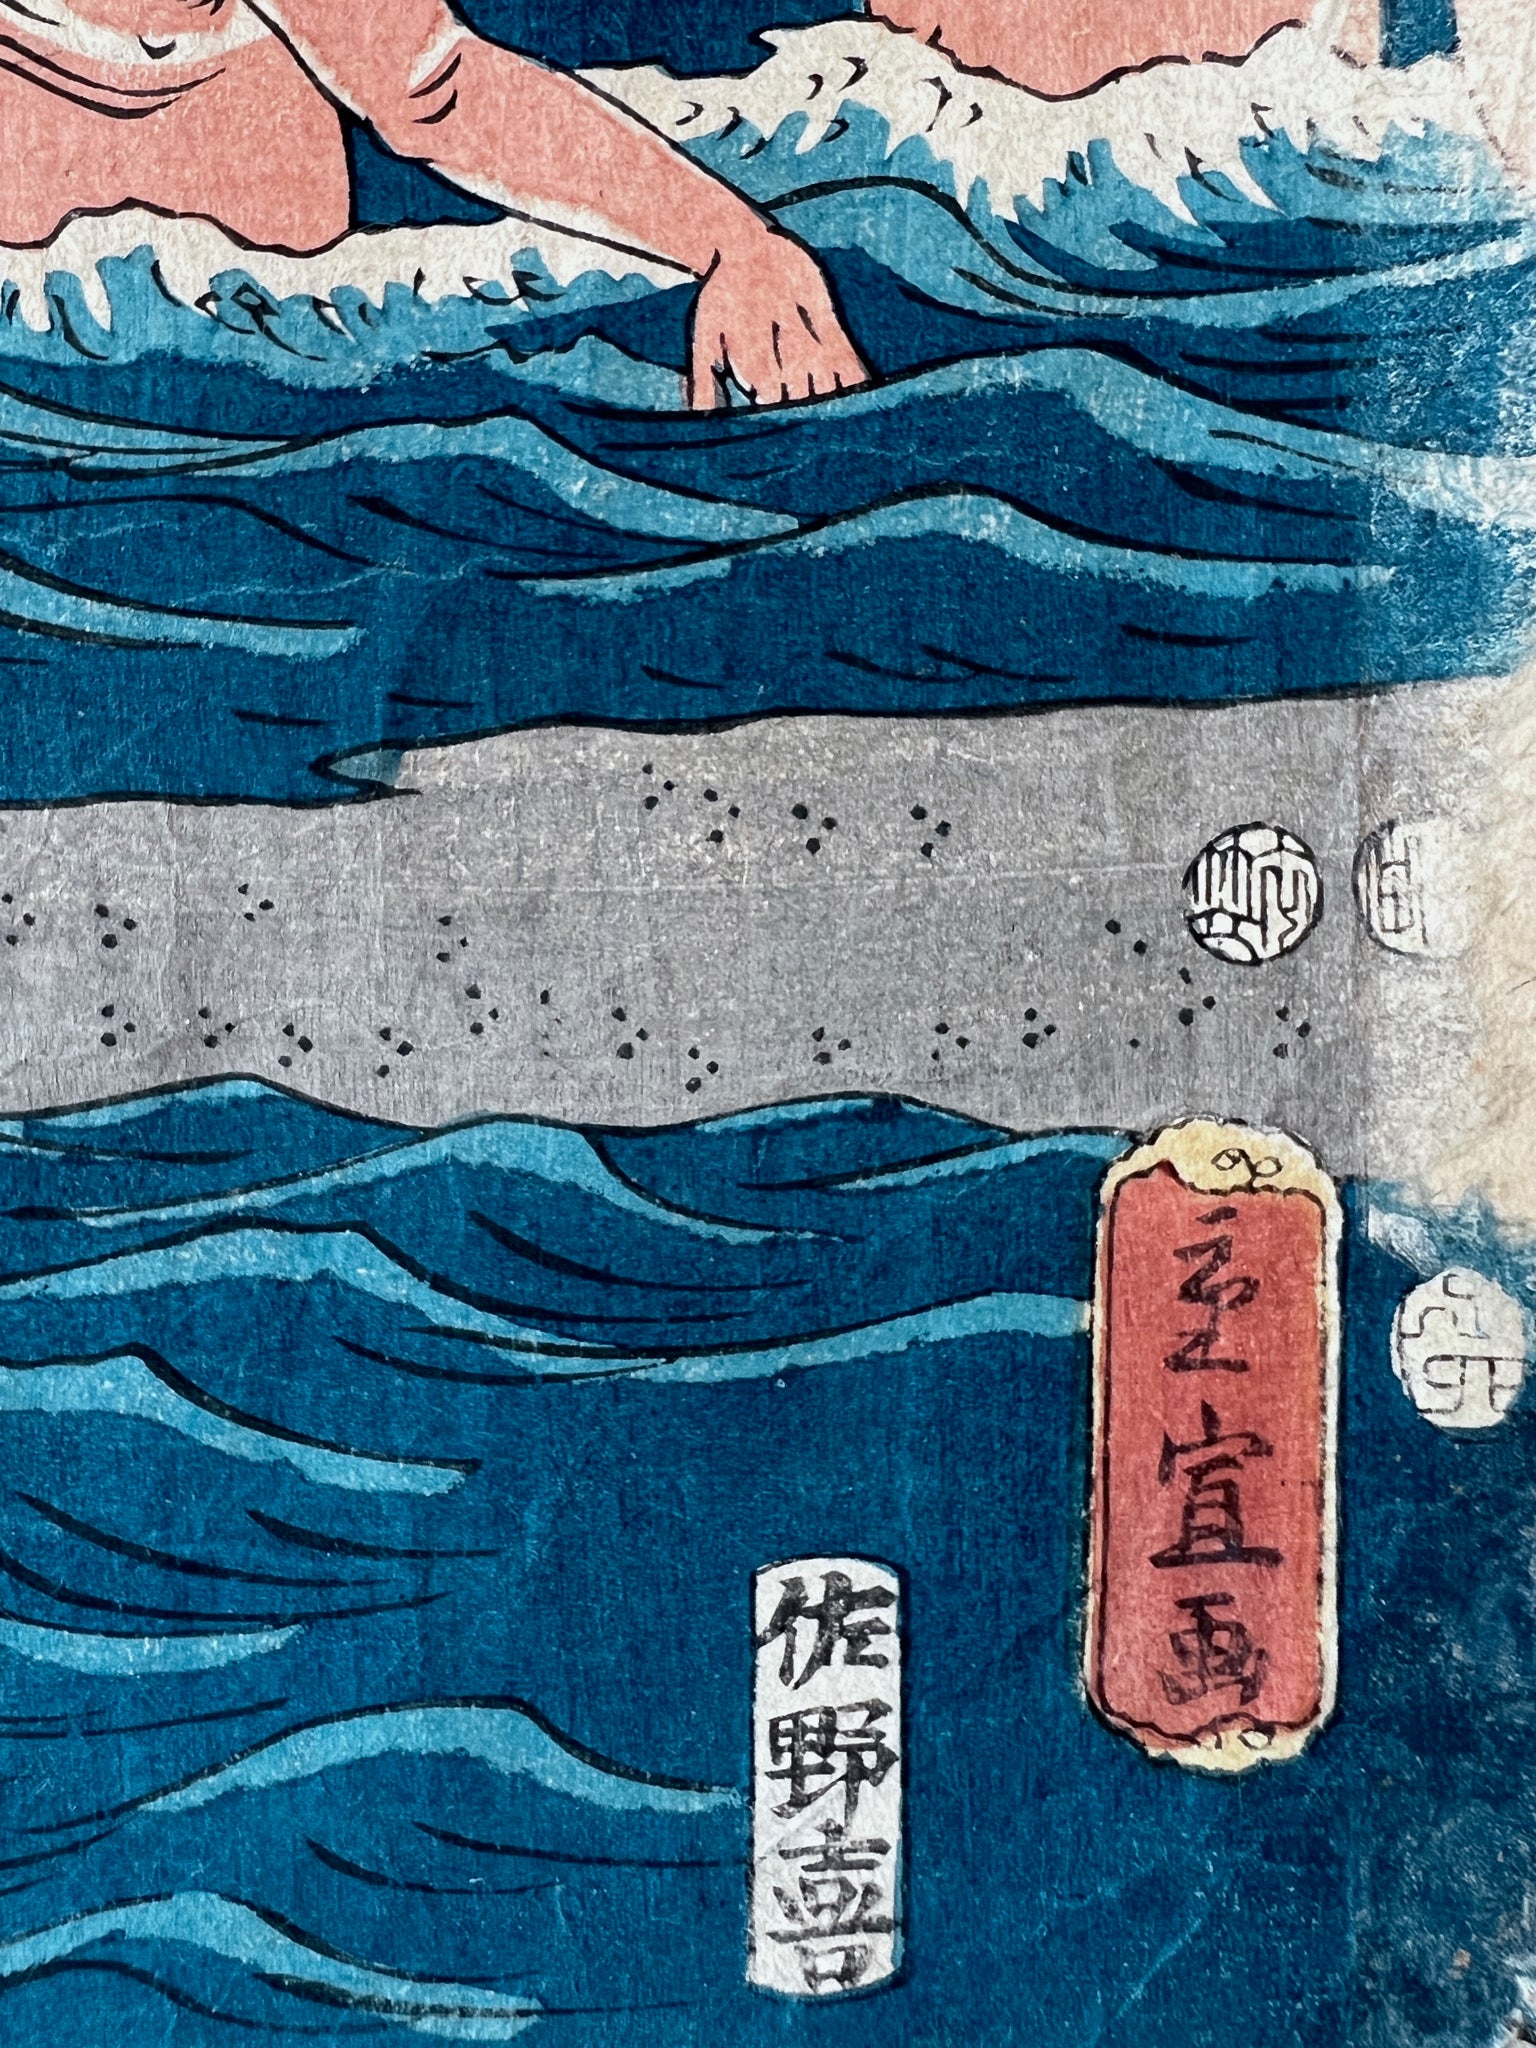 Estampes Japonaises de Hiroshige II (1826-1869) – Uchiwa Gallery